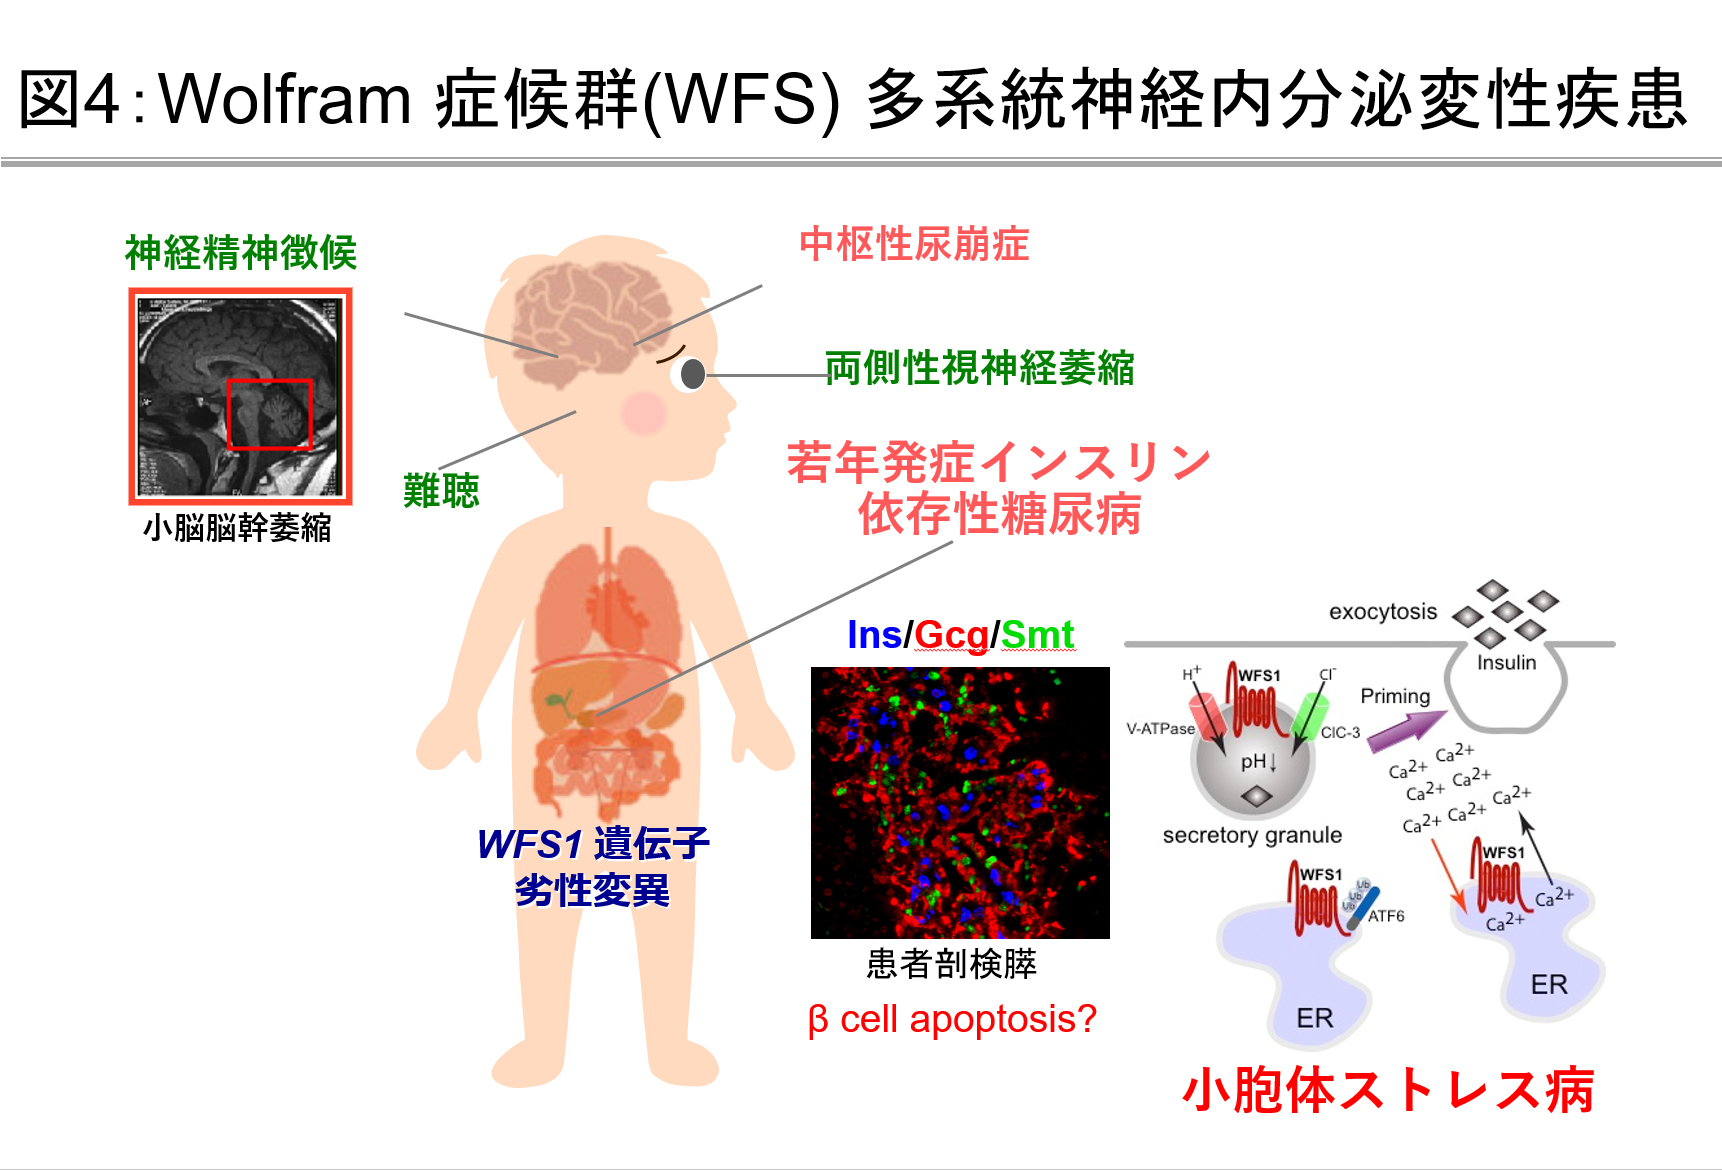 Wolfram 症候群(WFS) 多系統神経内分泌変性疾患